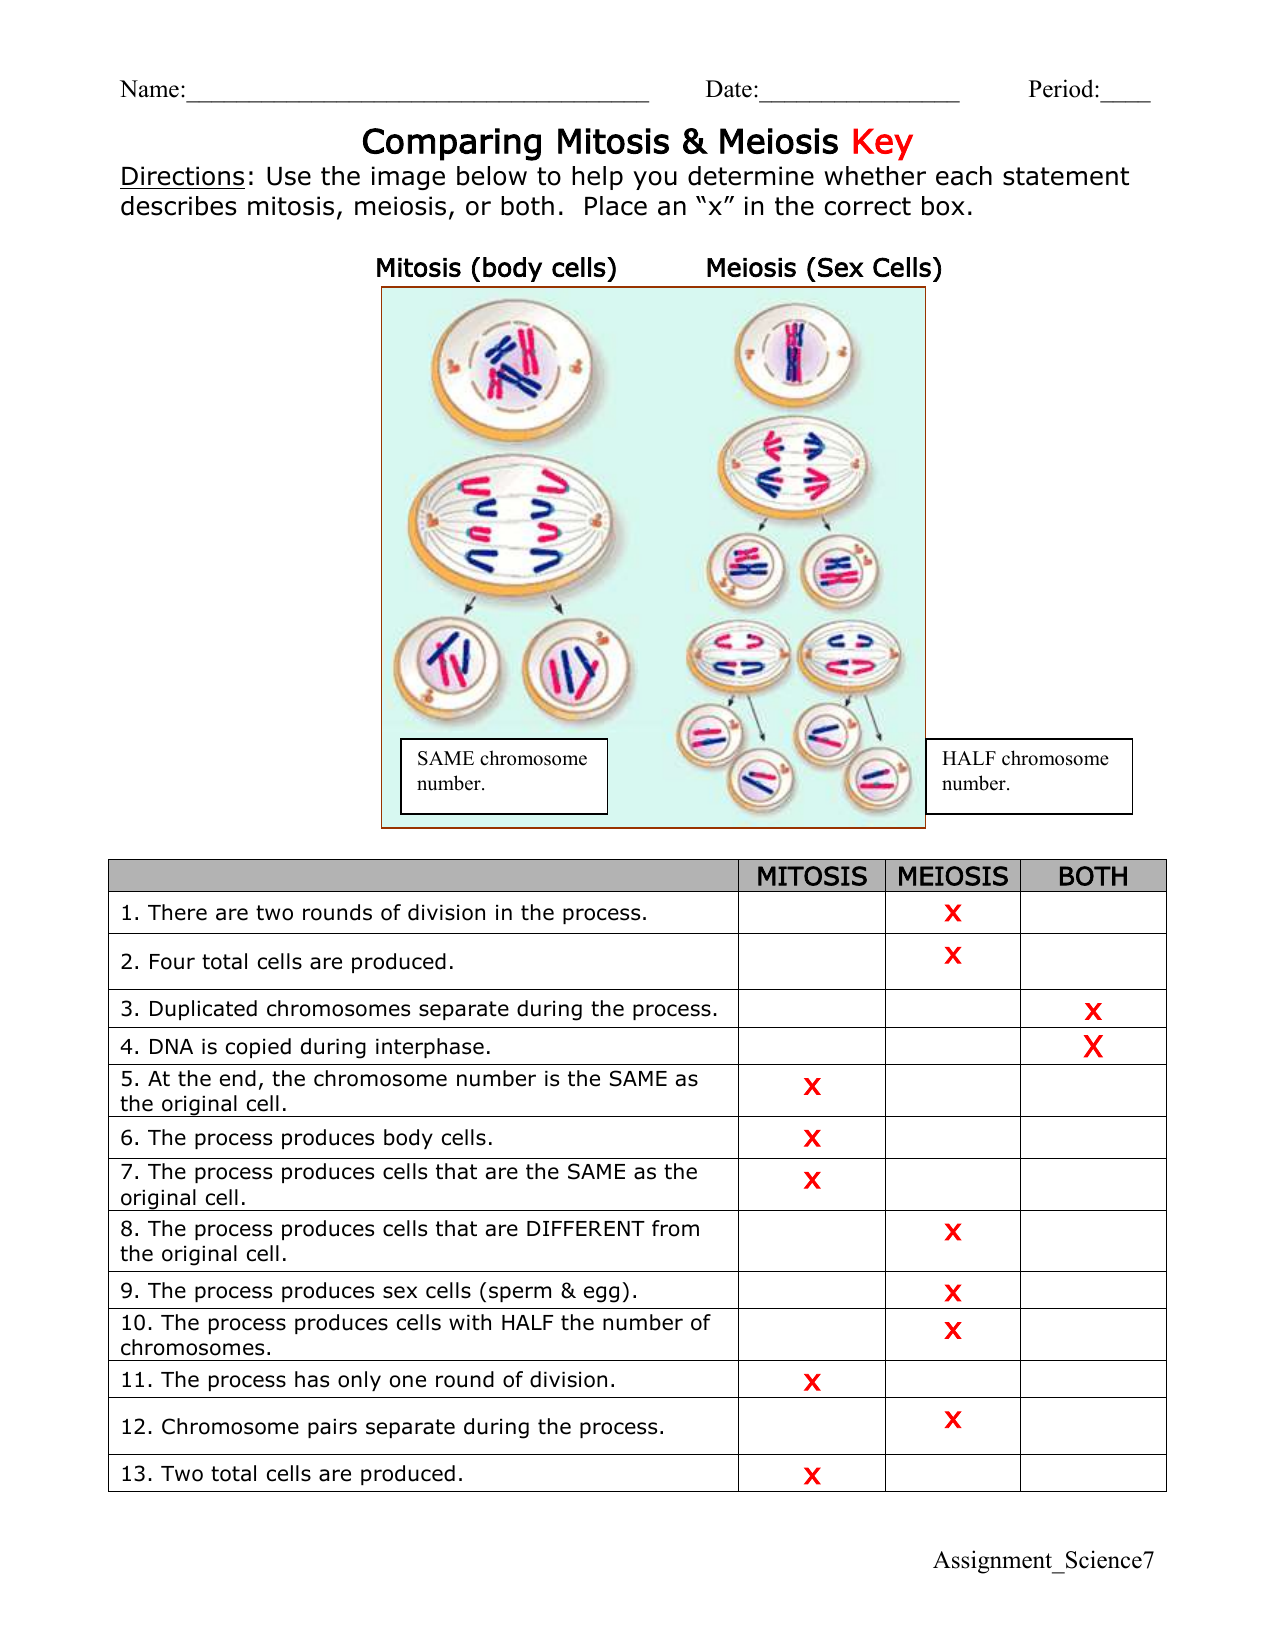 meiosis-worksheet-answer-key-pdf-iondesignart